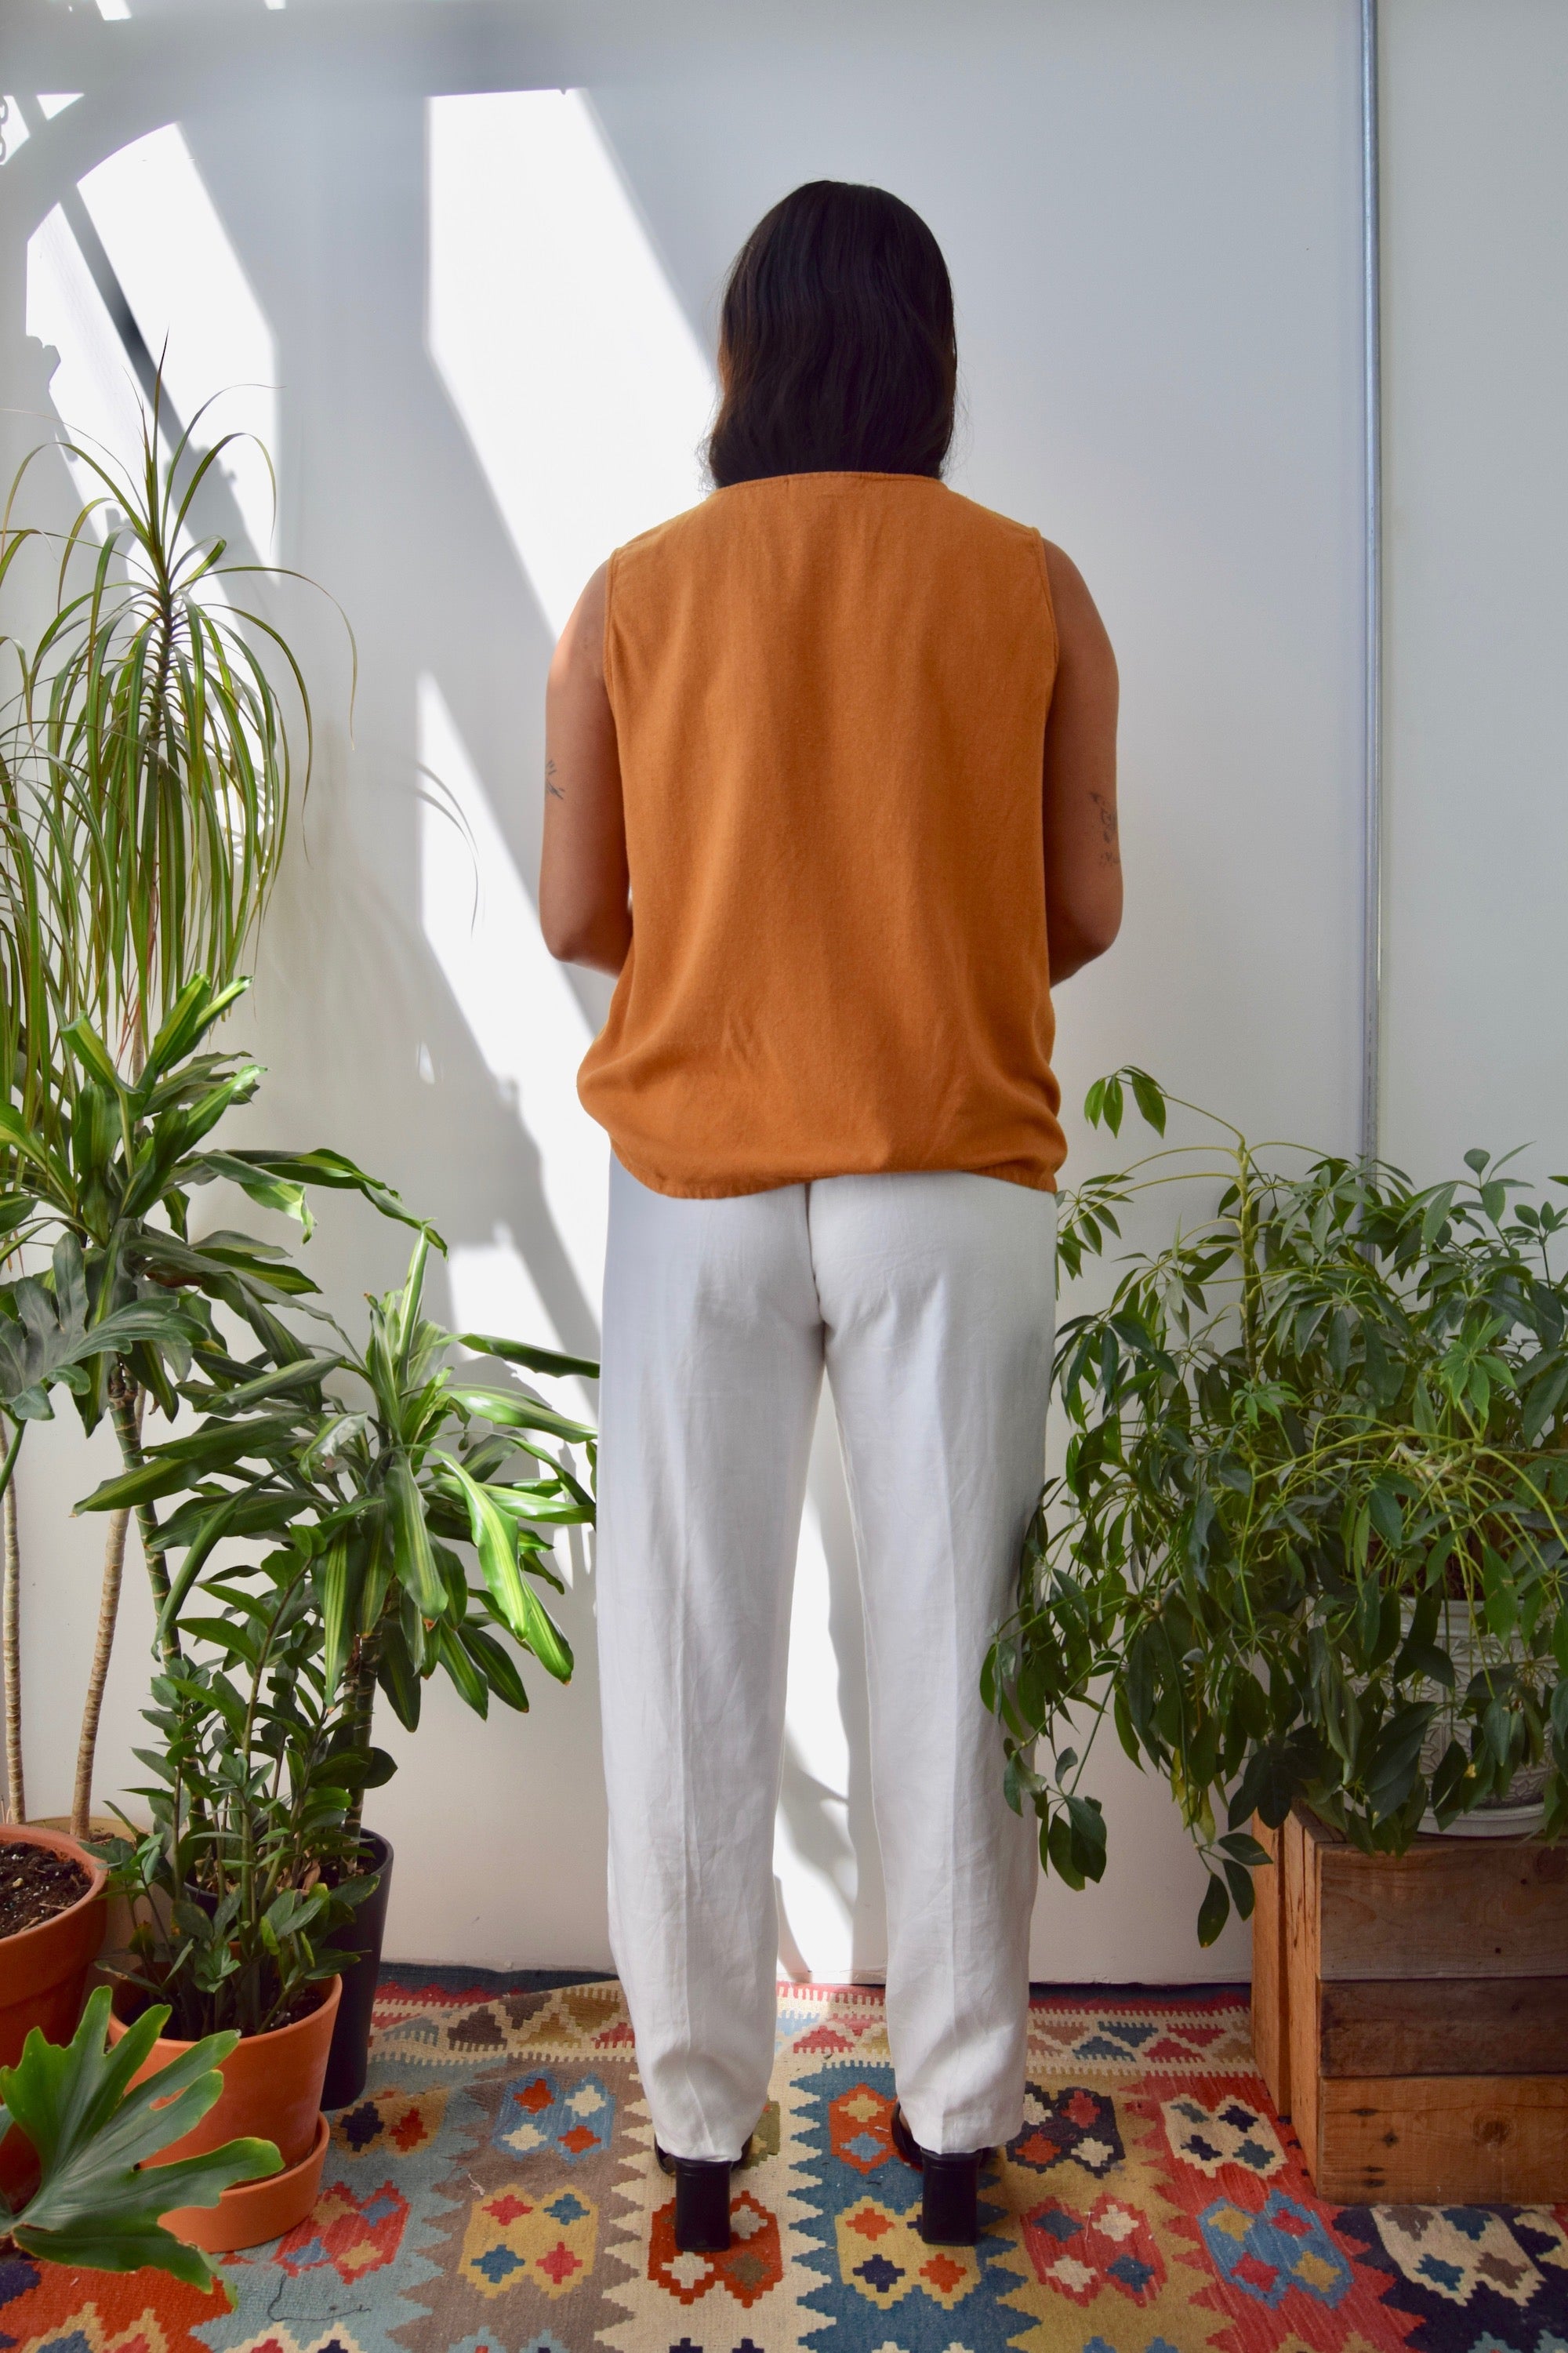 White Linen Lounge Pants